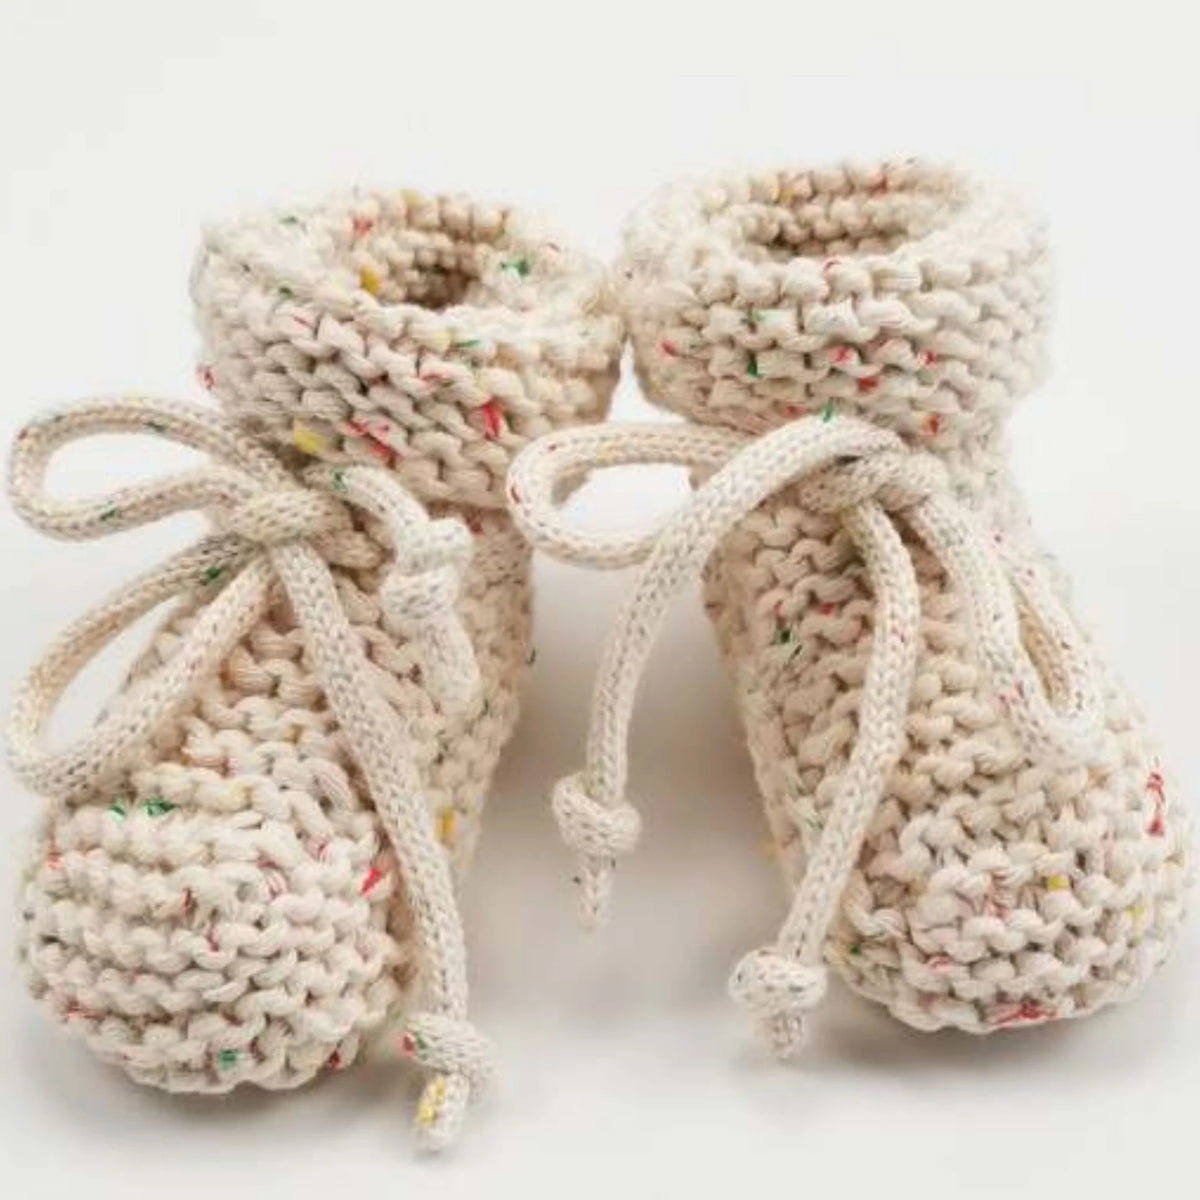 Lilla Hjärtat - Organic Knitted Booties | Funfetti Speckle